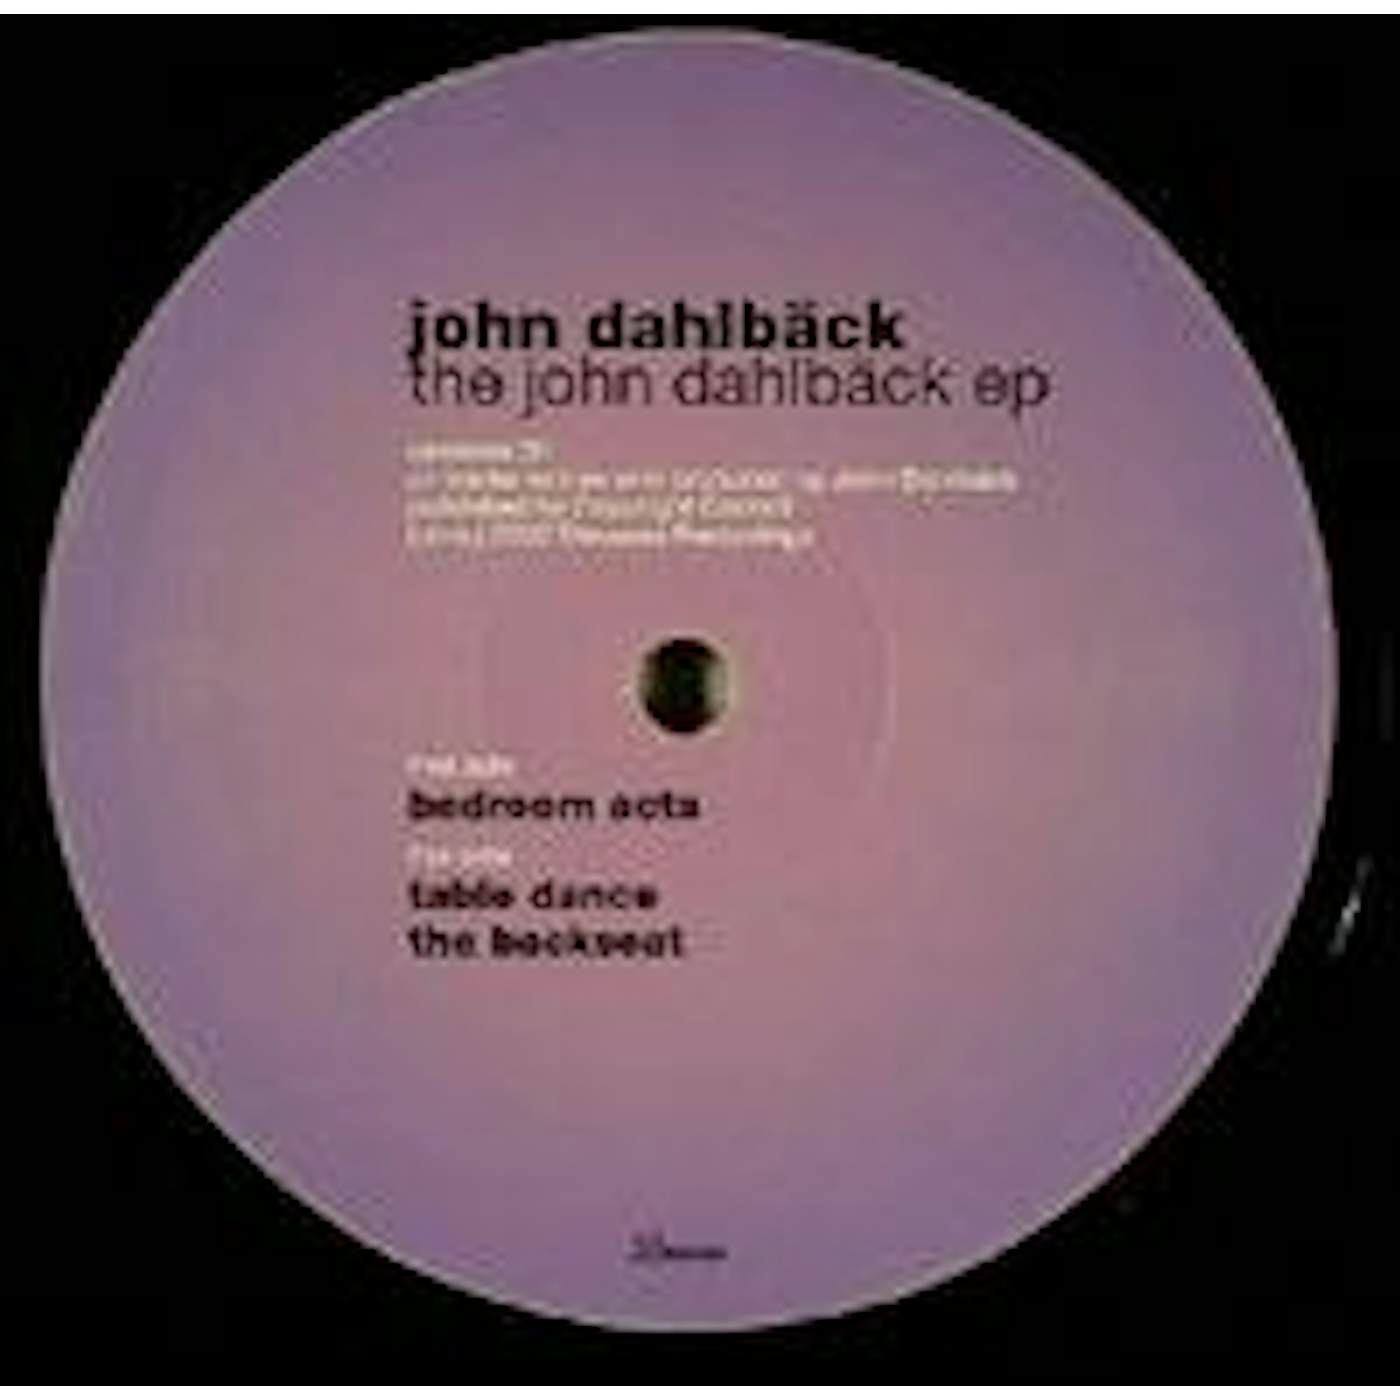 John Dahlbäck JOHN DAHLBACK EP Vinyl Record